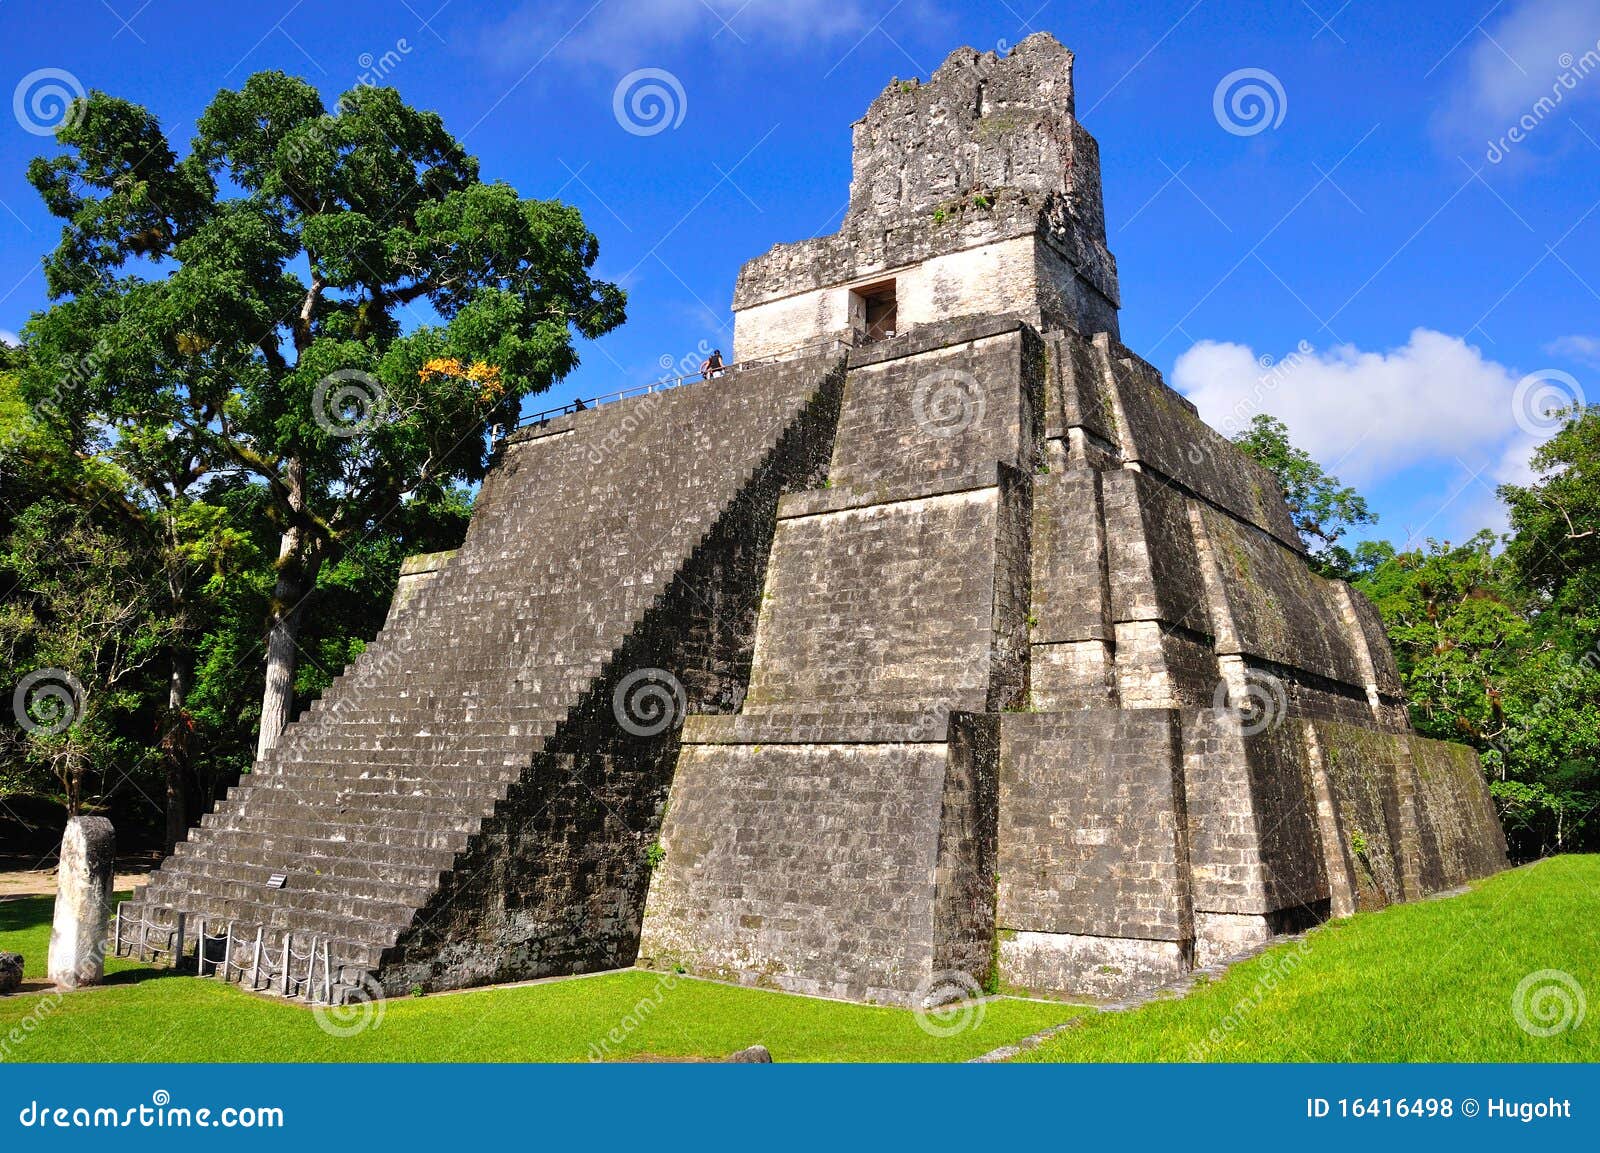 tikal ancient maya temple, guatemala